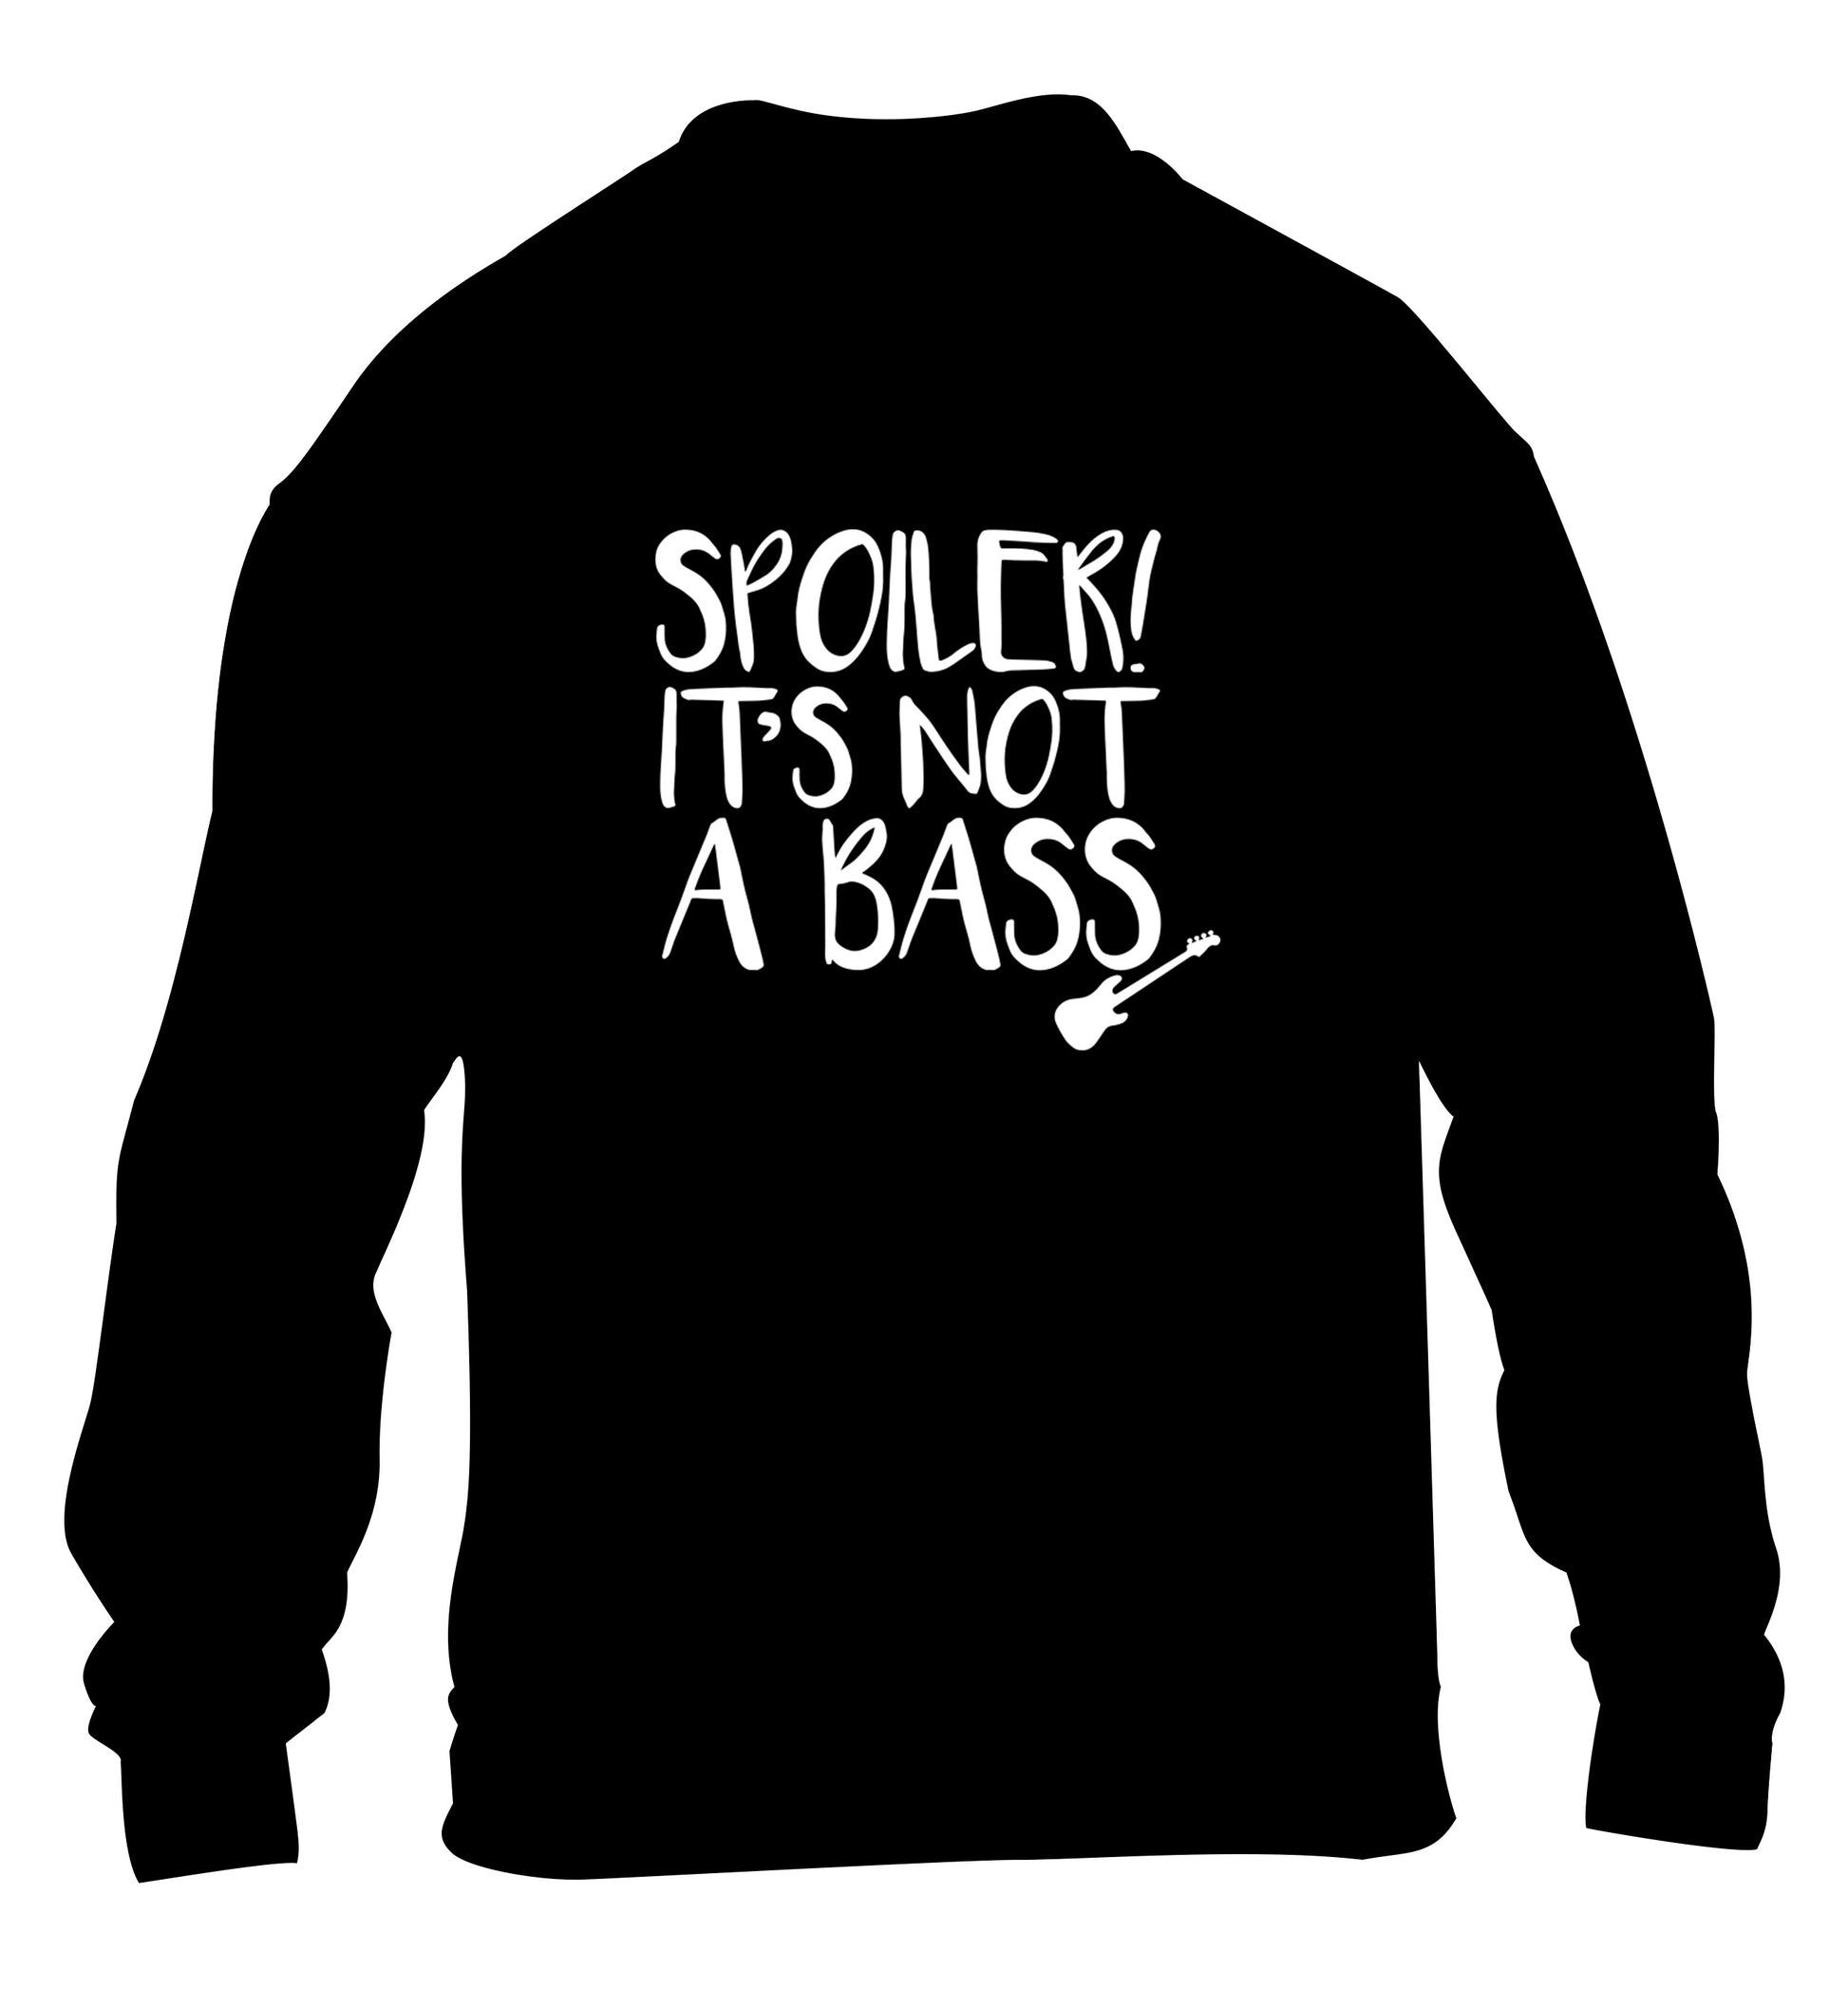 Spoiler it's not a bass children's black sweater 12-13 Years